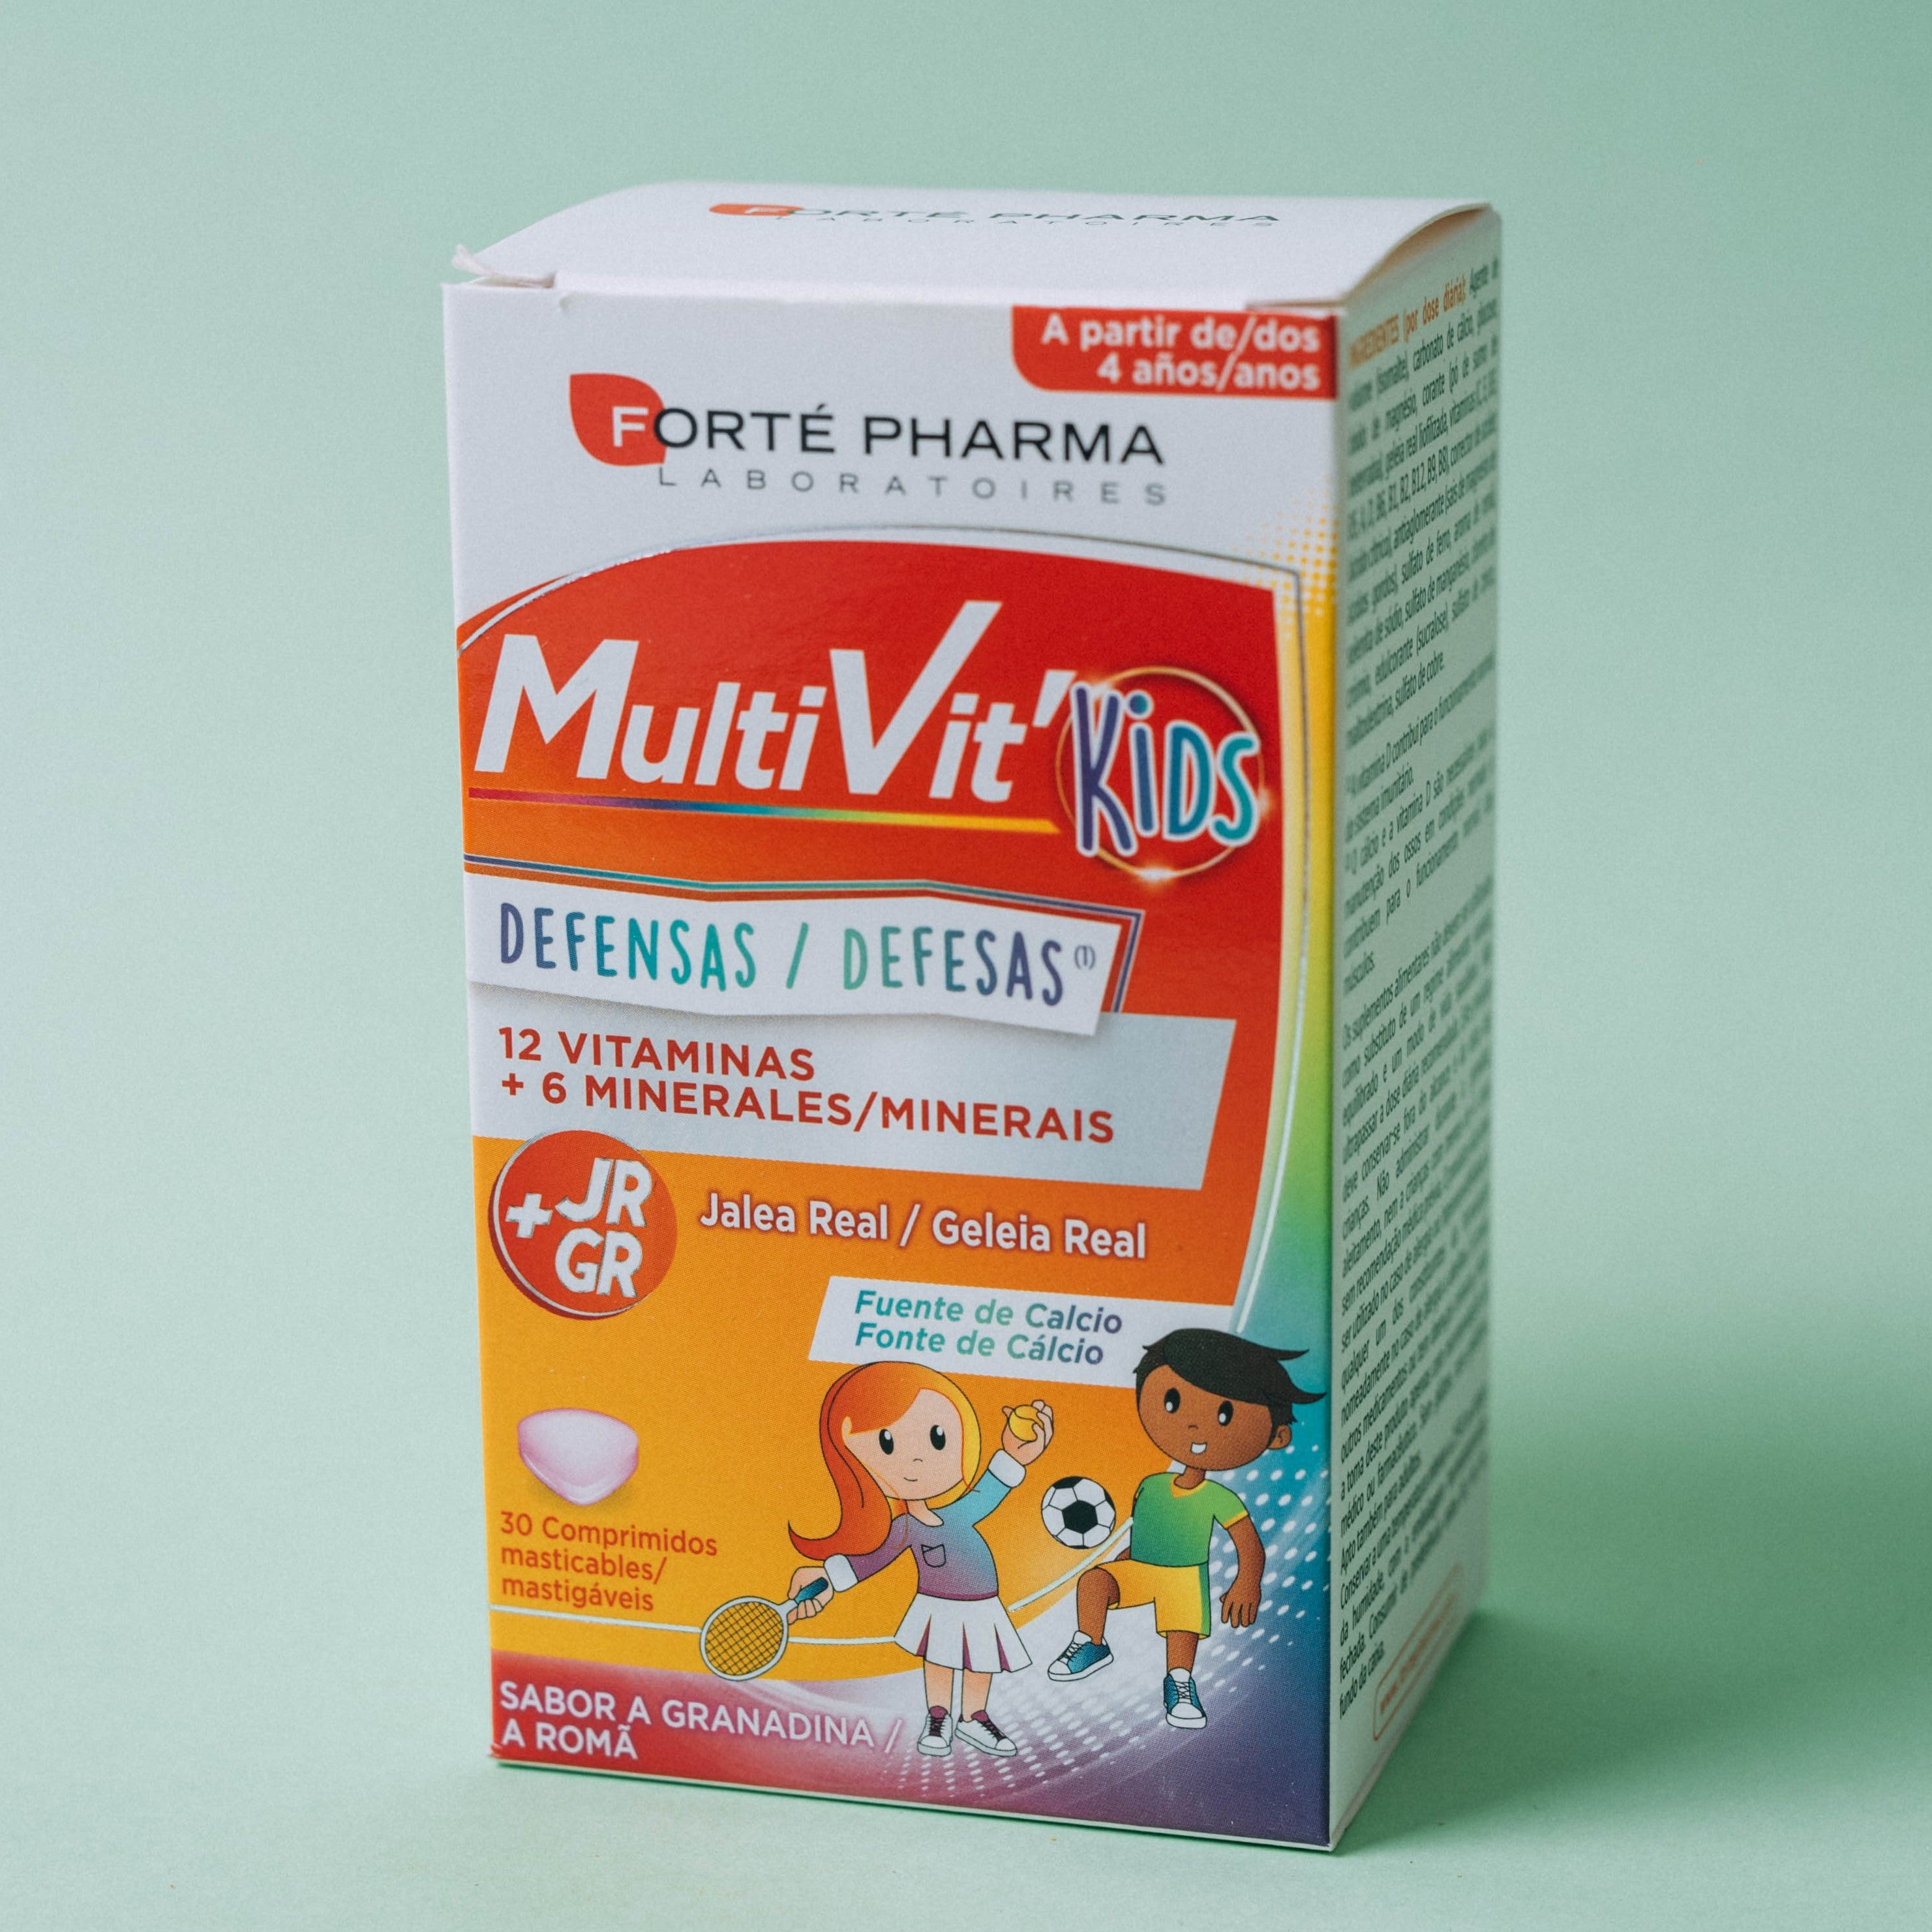 multivit kids-Defensas e Inmunidad-Naturalidad-Forté Pharma